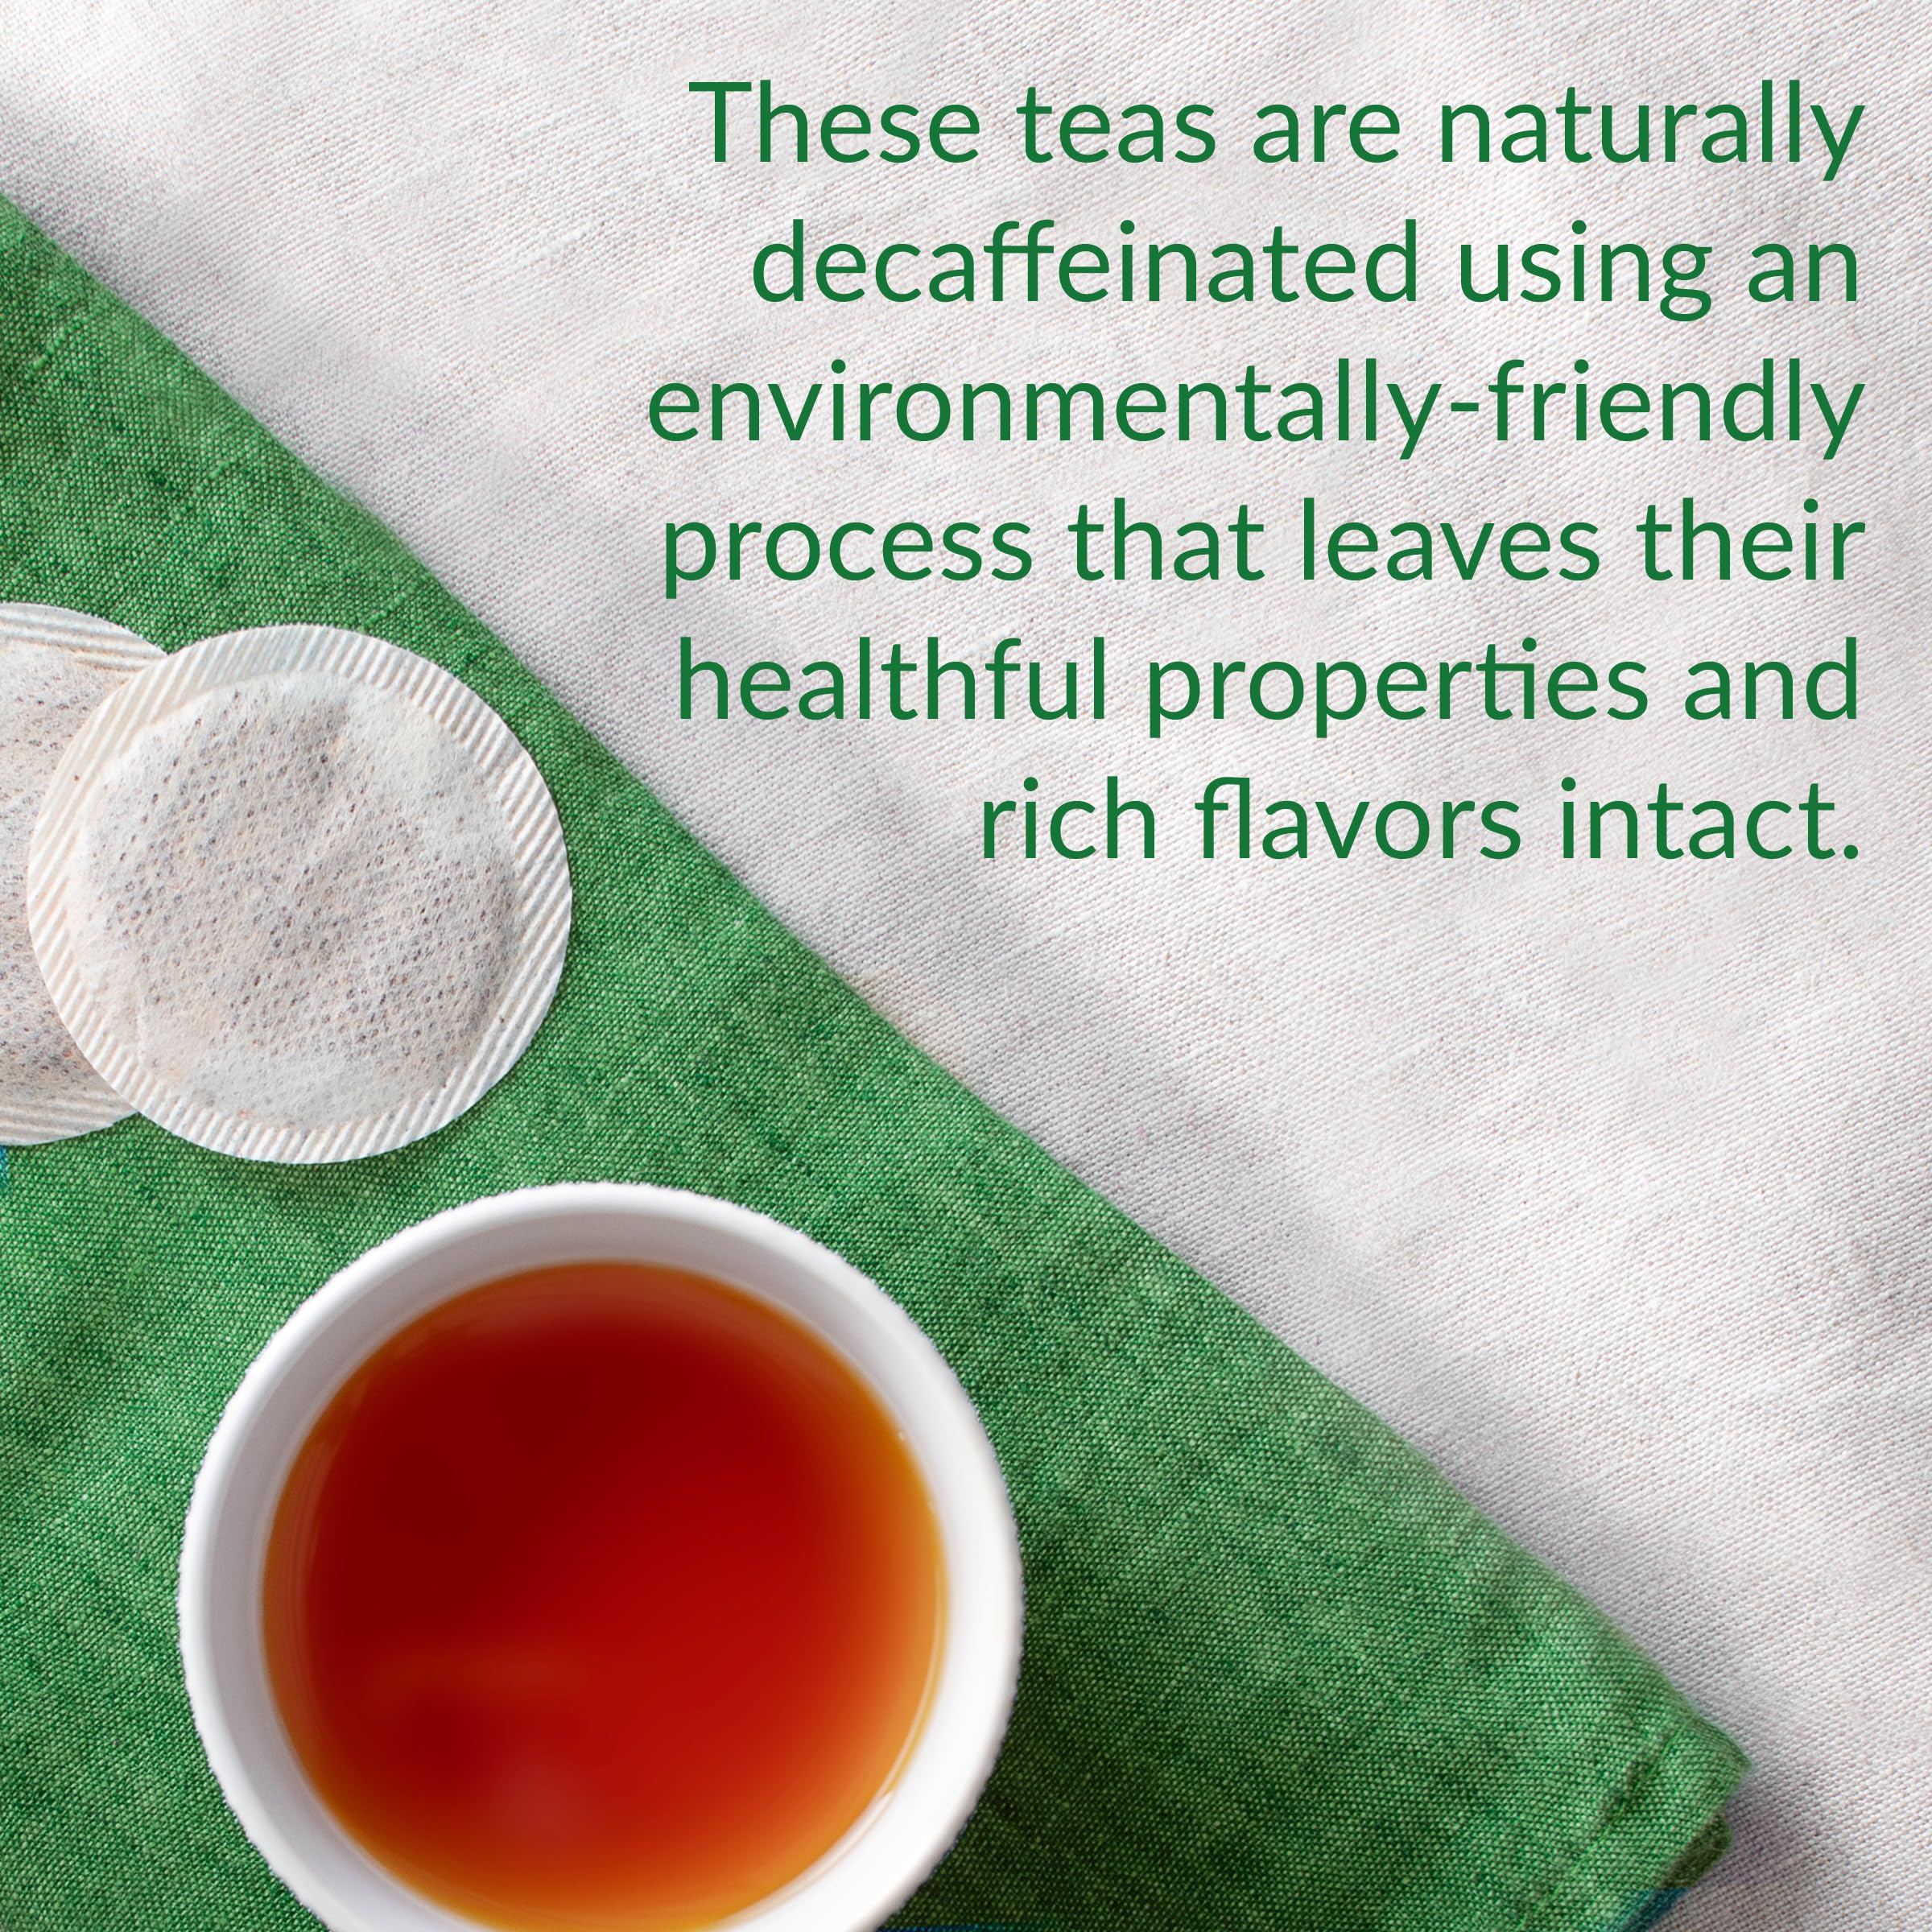 The Republic of Tea — Decaf British Breakfast Black Tea Tin, 50 Tea Bags, Environmentally- Friendly Decaffeinated Tea